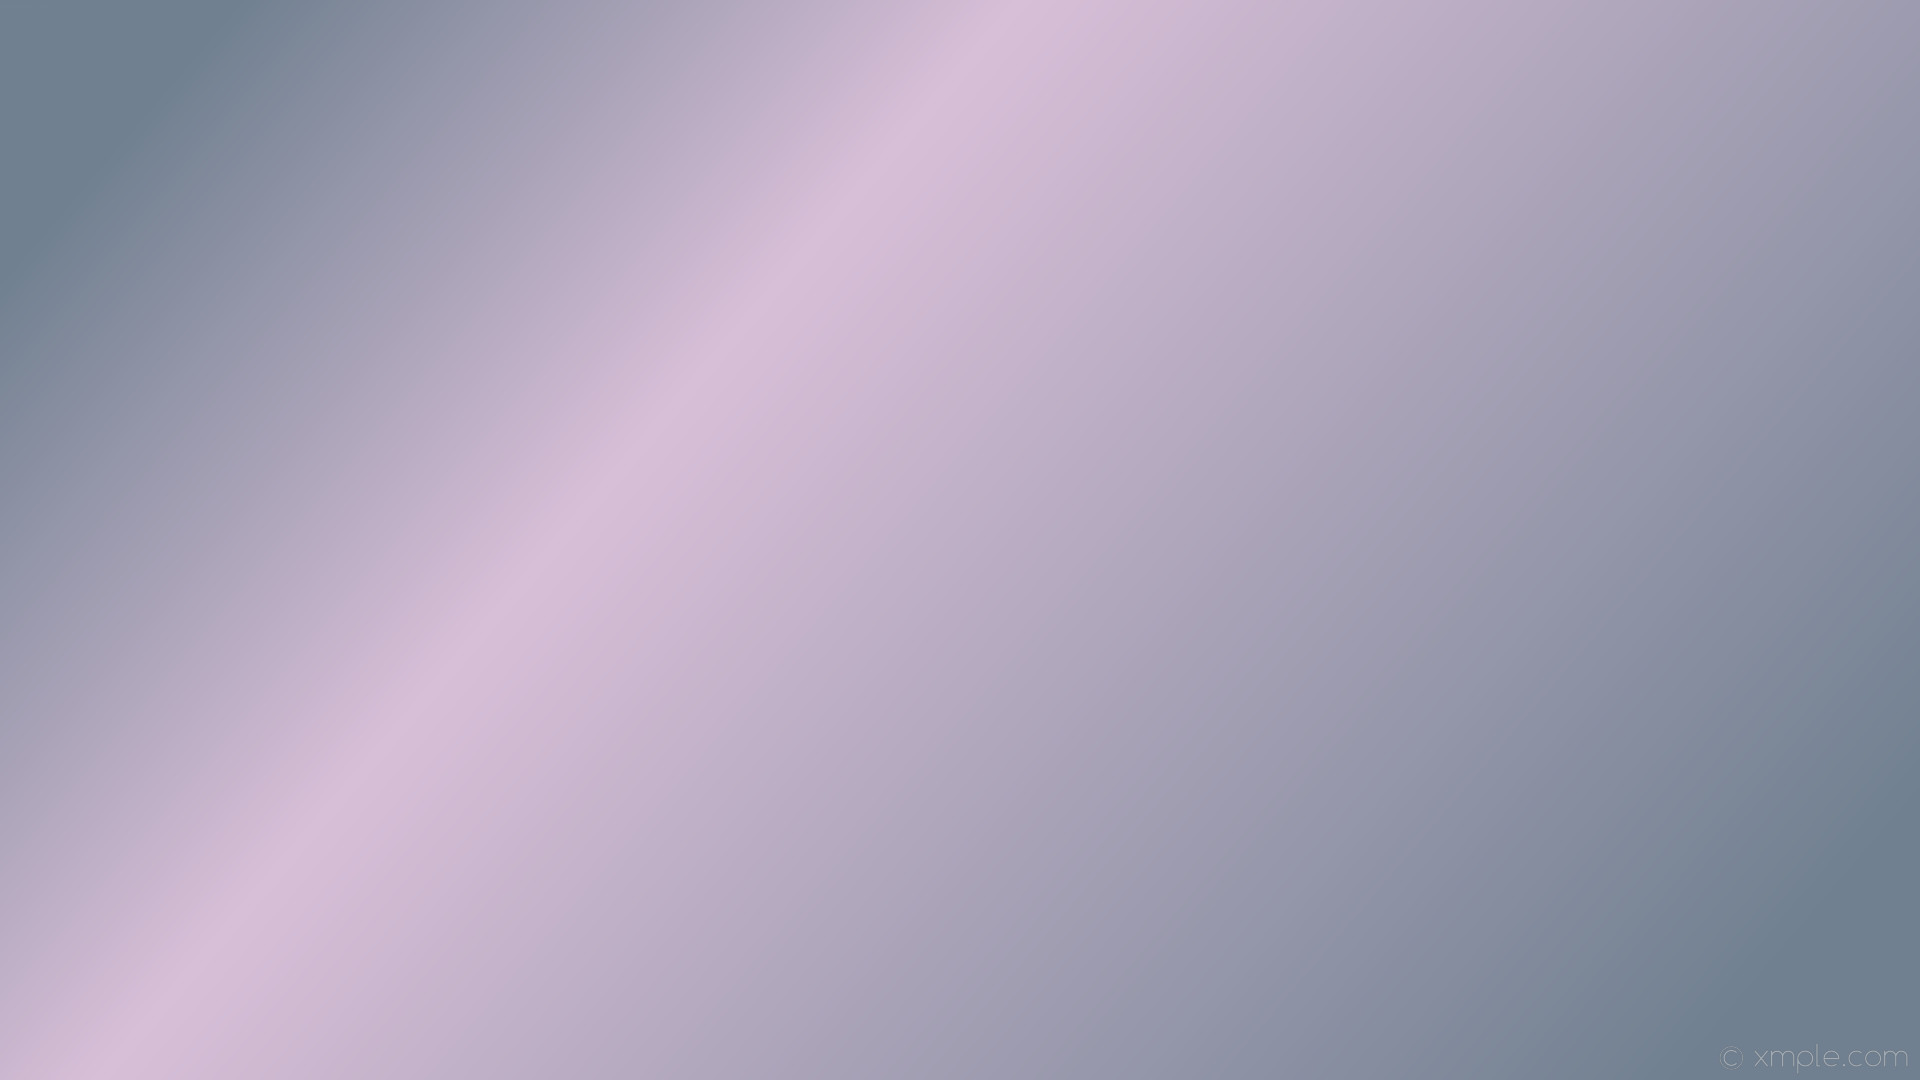 1920x1080 wallpaper linear highlight grey gradient purple slate gray thistle #708090  #d8bfd8 345Â° 67